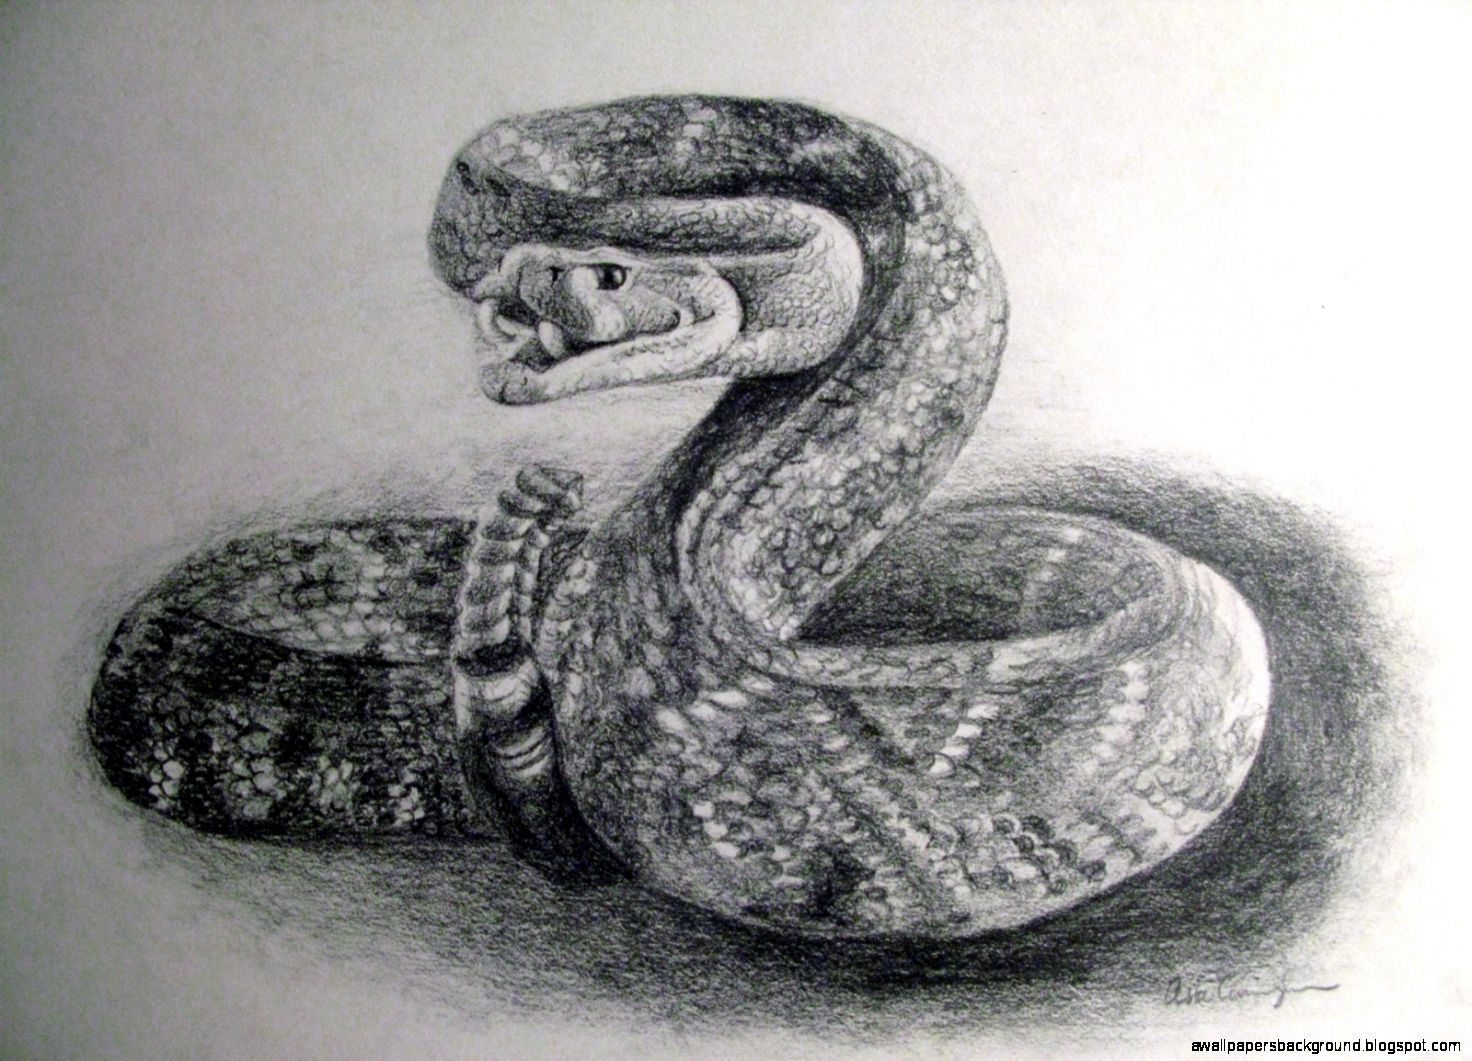 King Cobra Snake Realistic Snake Head Drawing The king cobra is